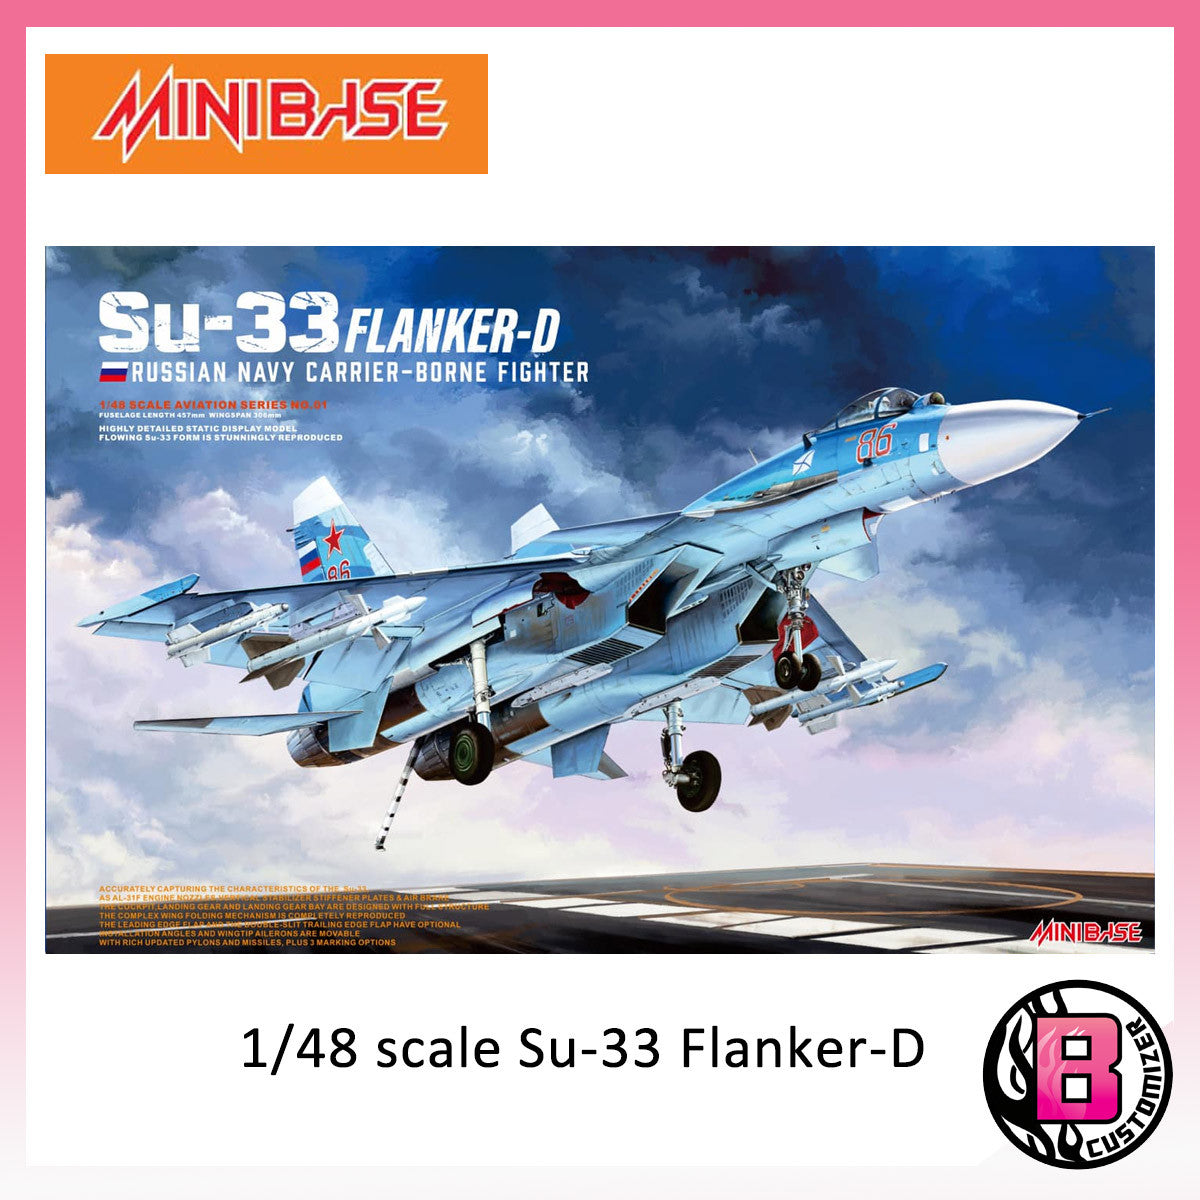 Minibase 1/48 Su-33 Flanker-D